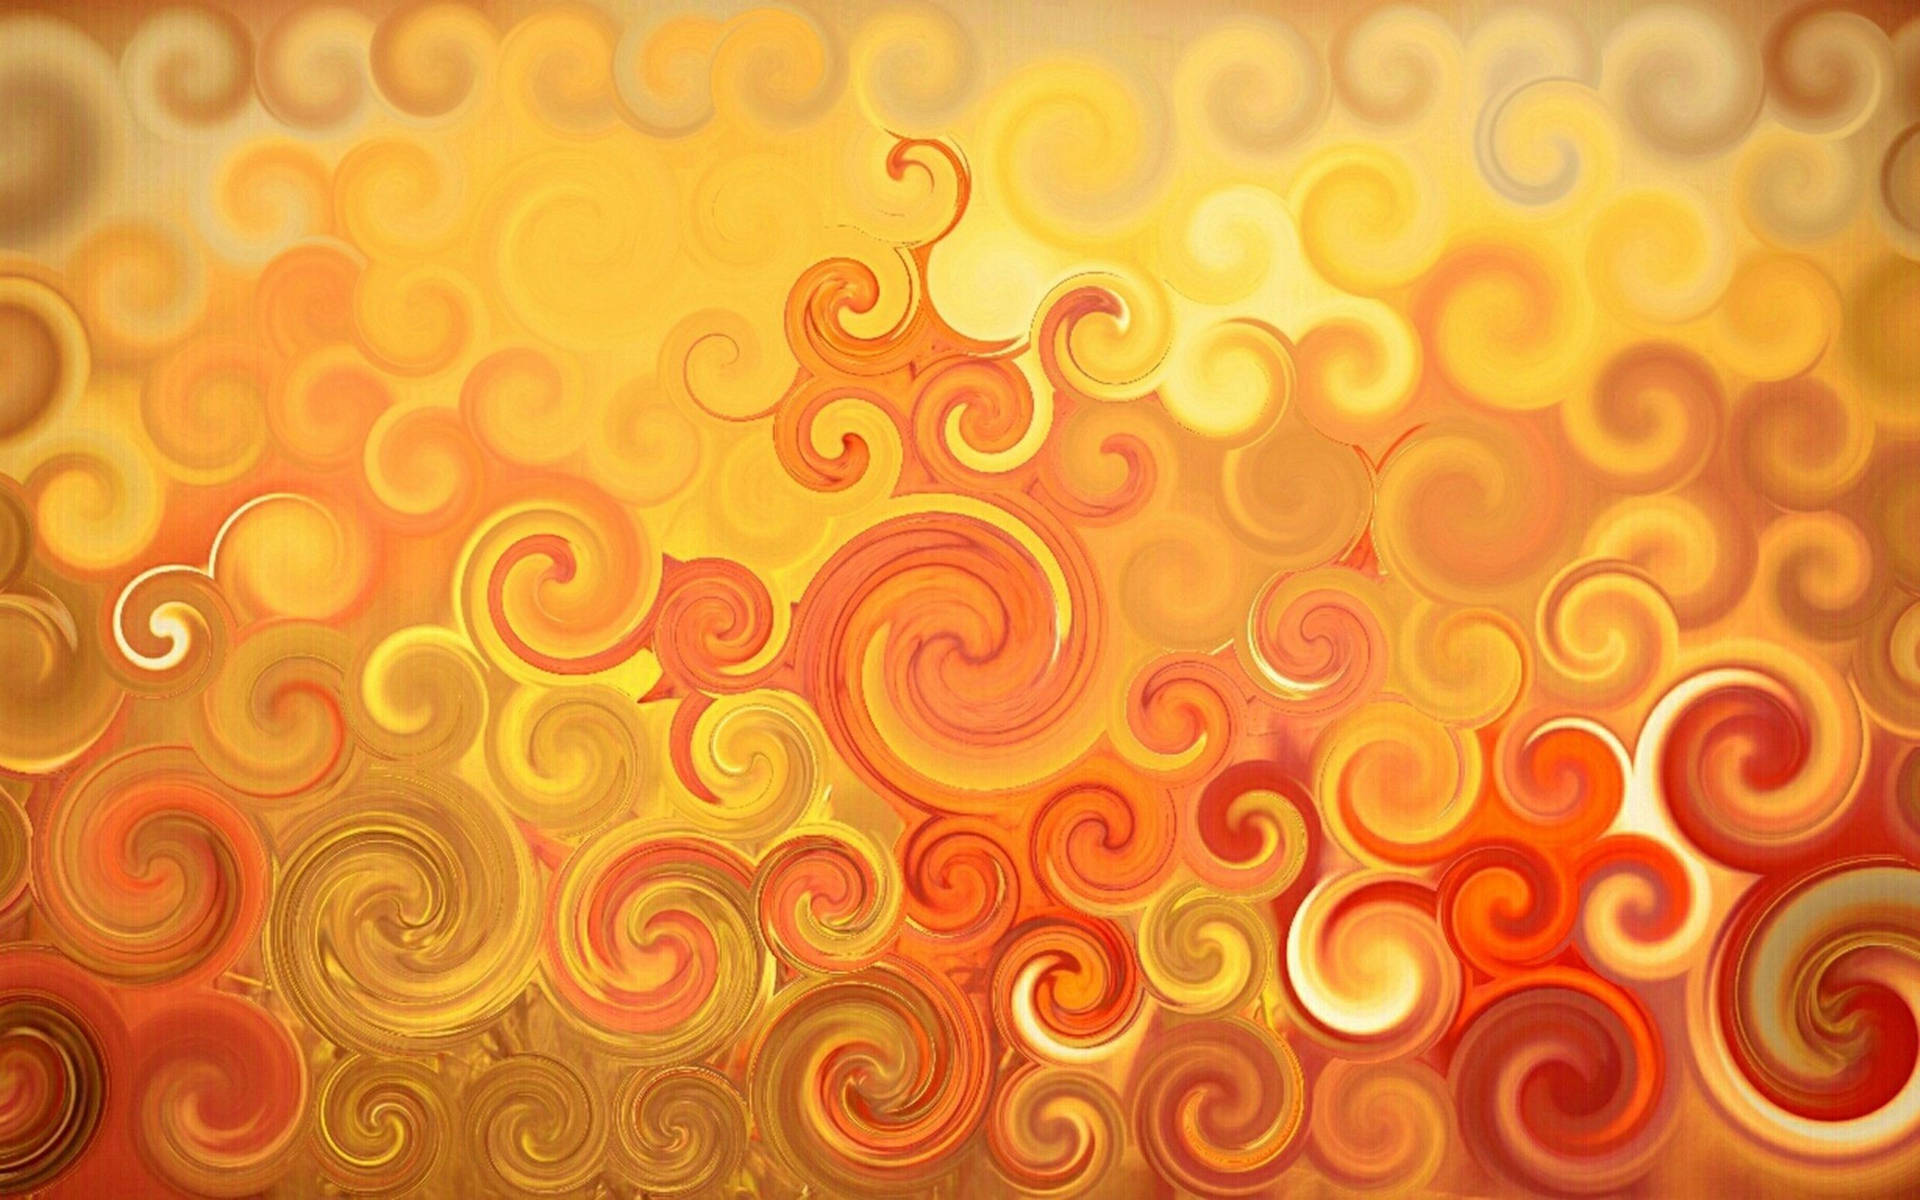 Spiral abstract pattern orange background wallpaper.